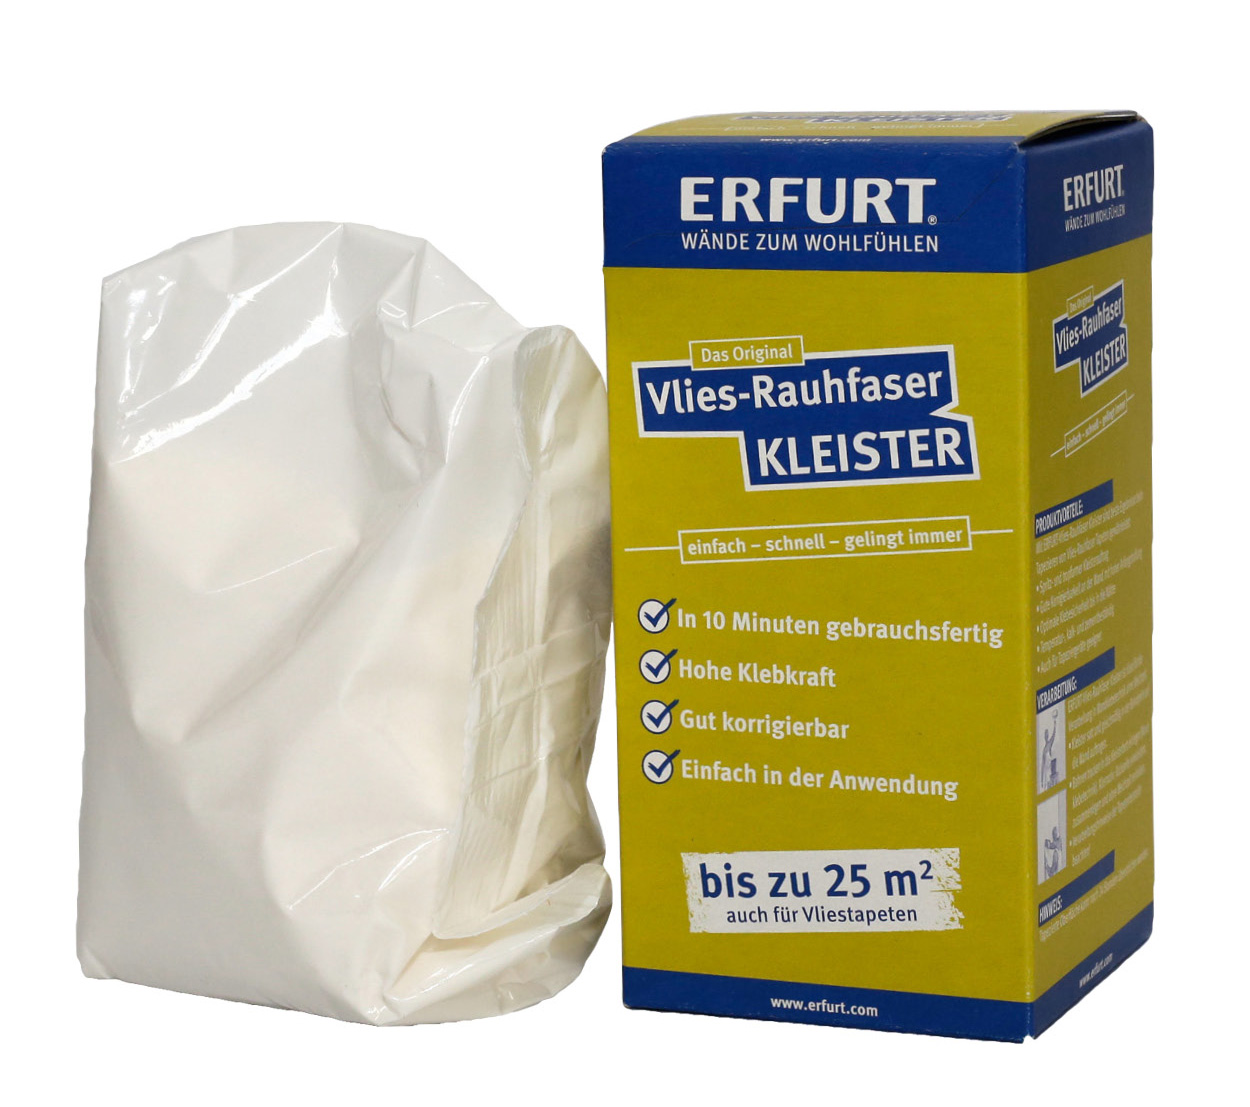 Erfurt Vlies-Rauhfaser Kleister | 200 g